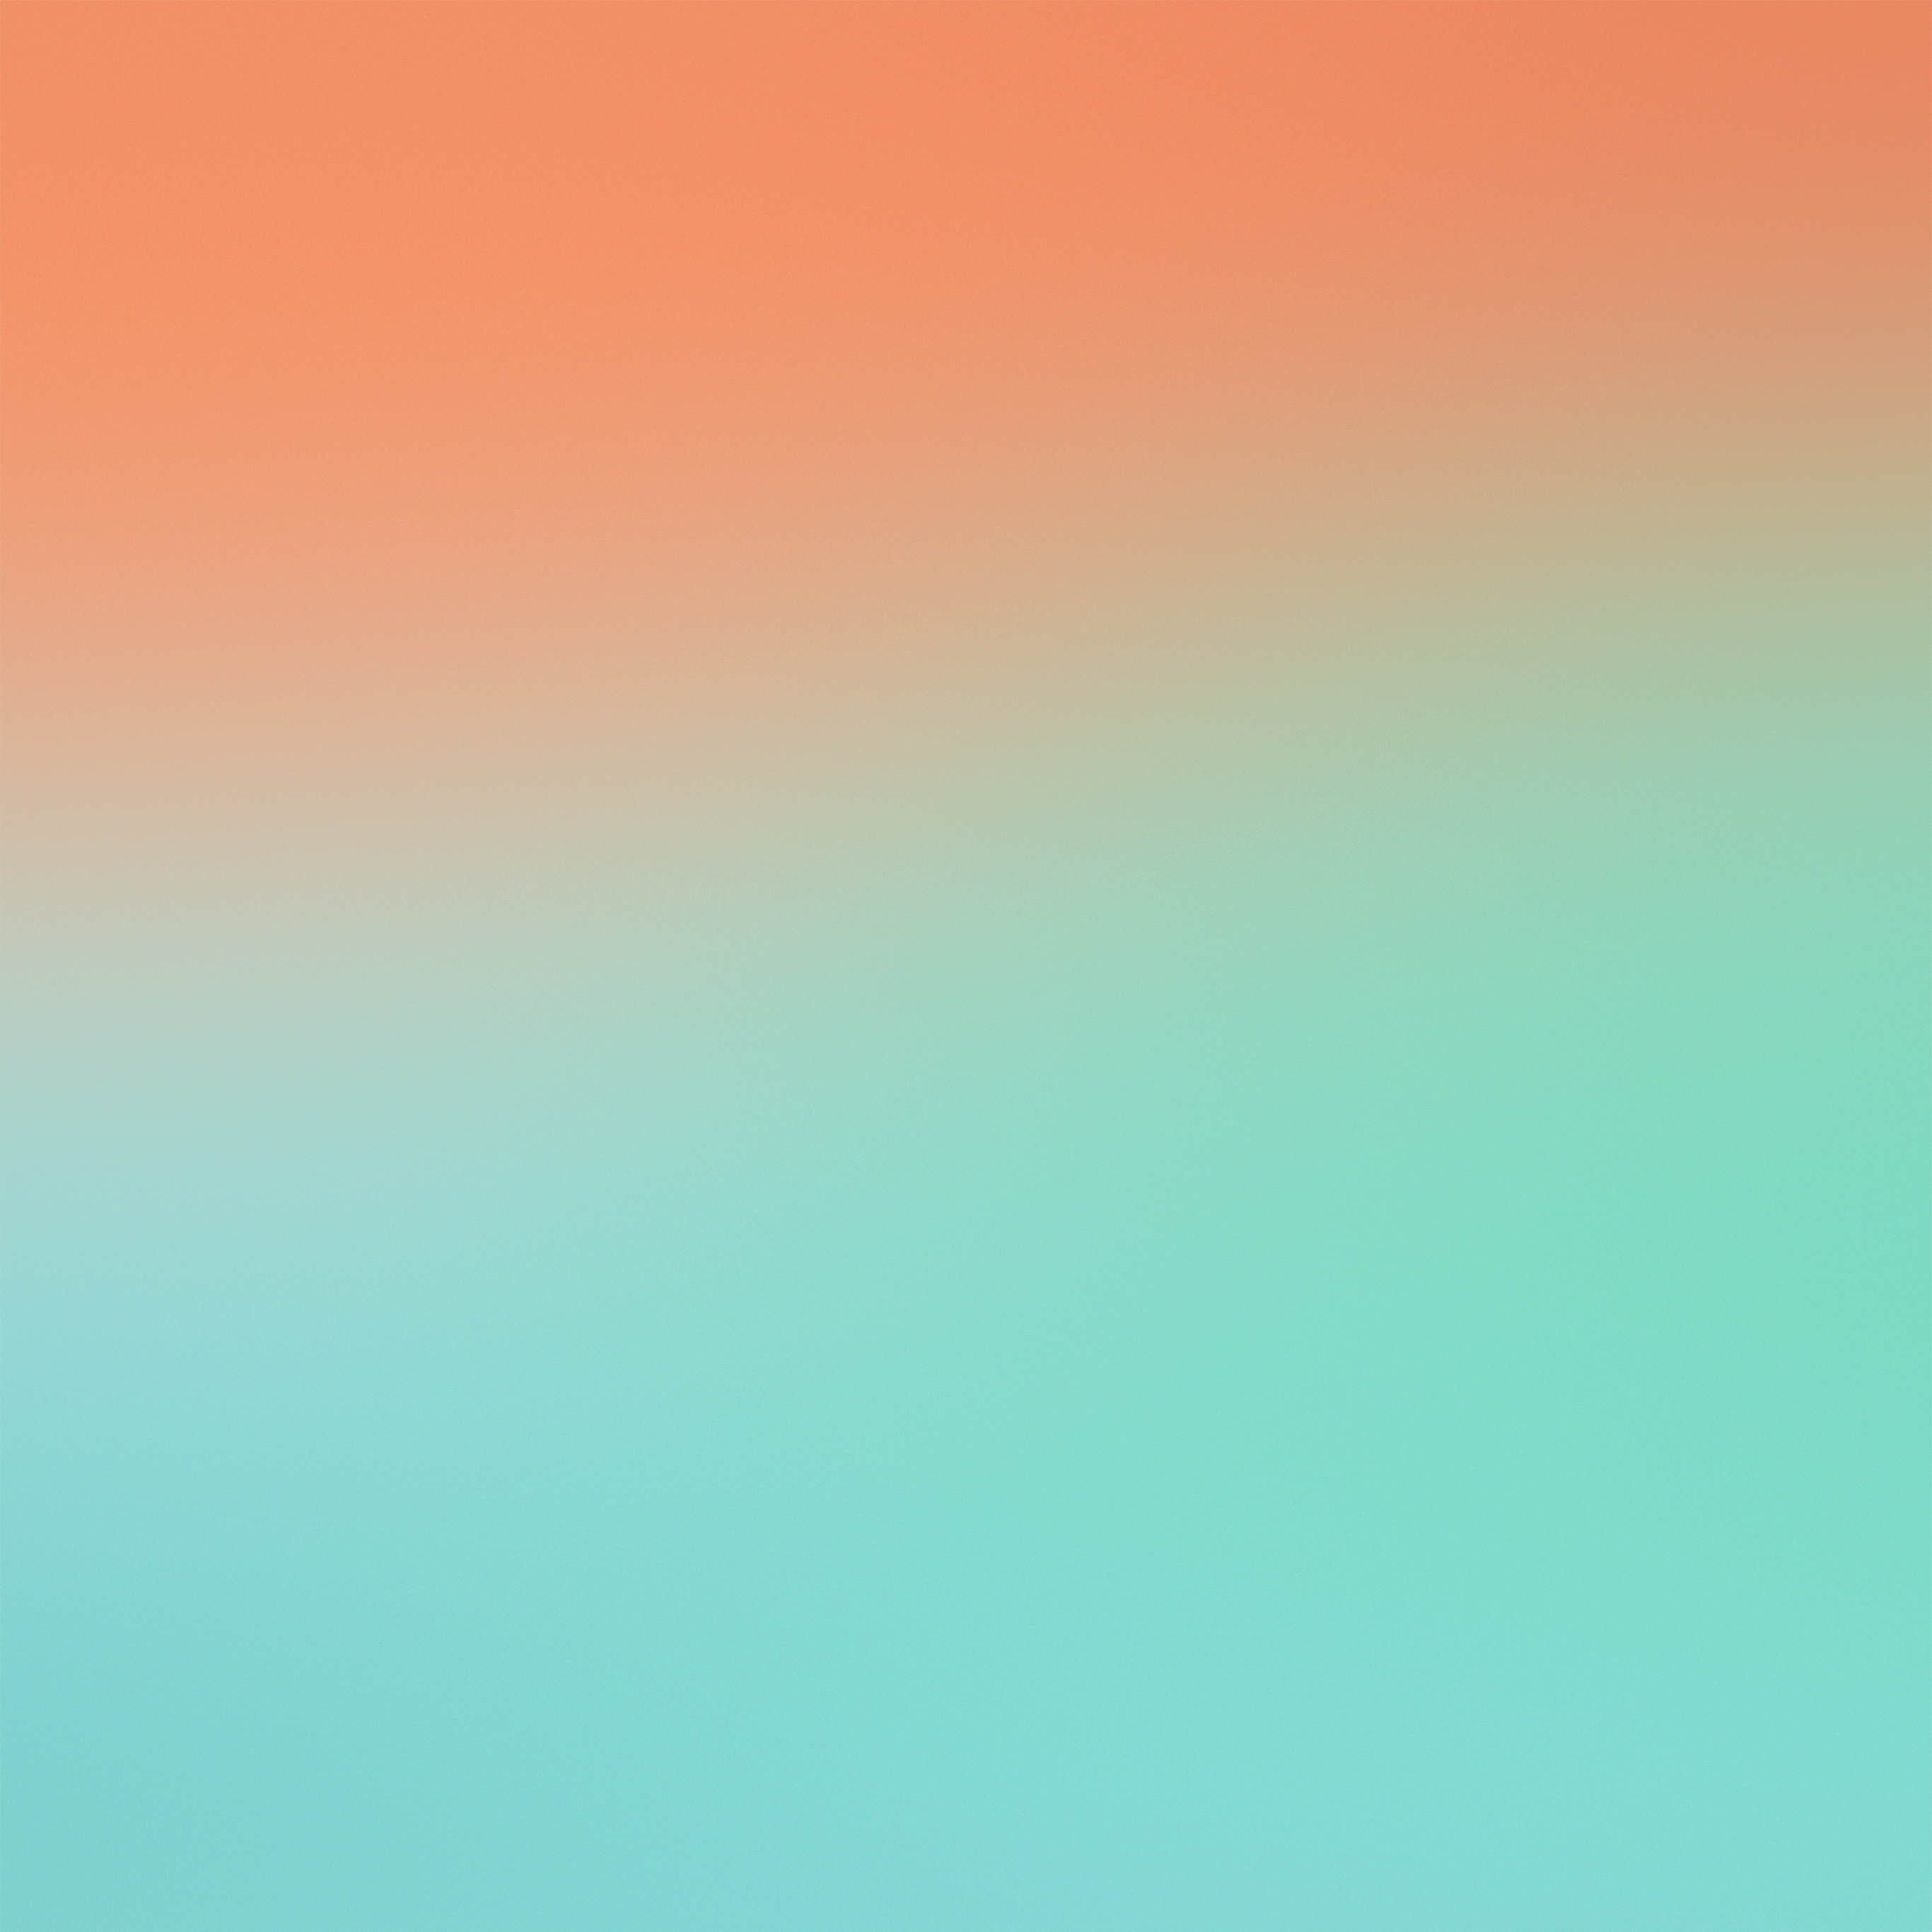 A gradient image with a blur effect - Pastel orange